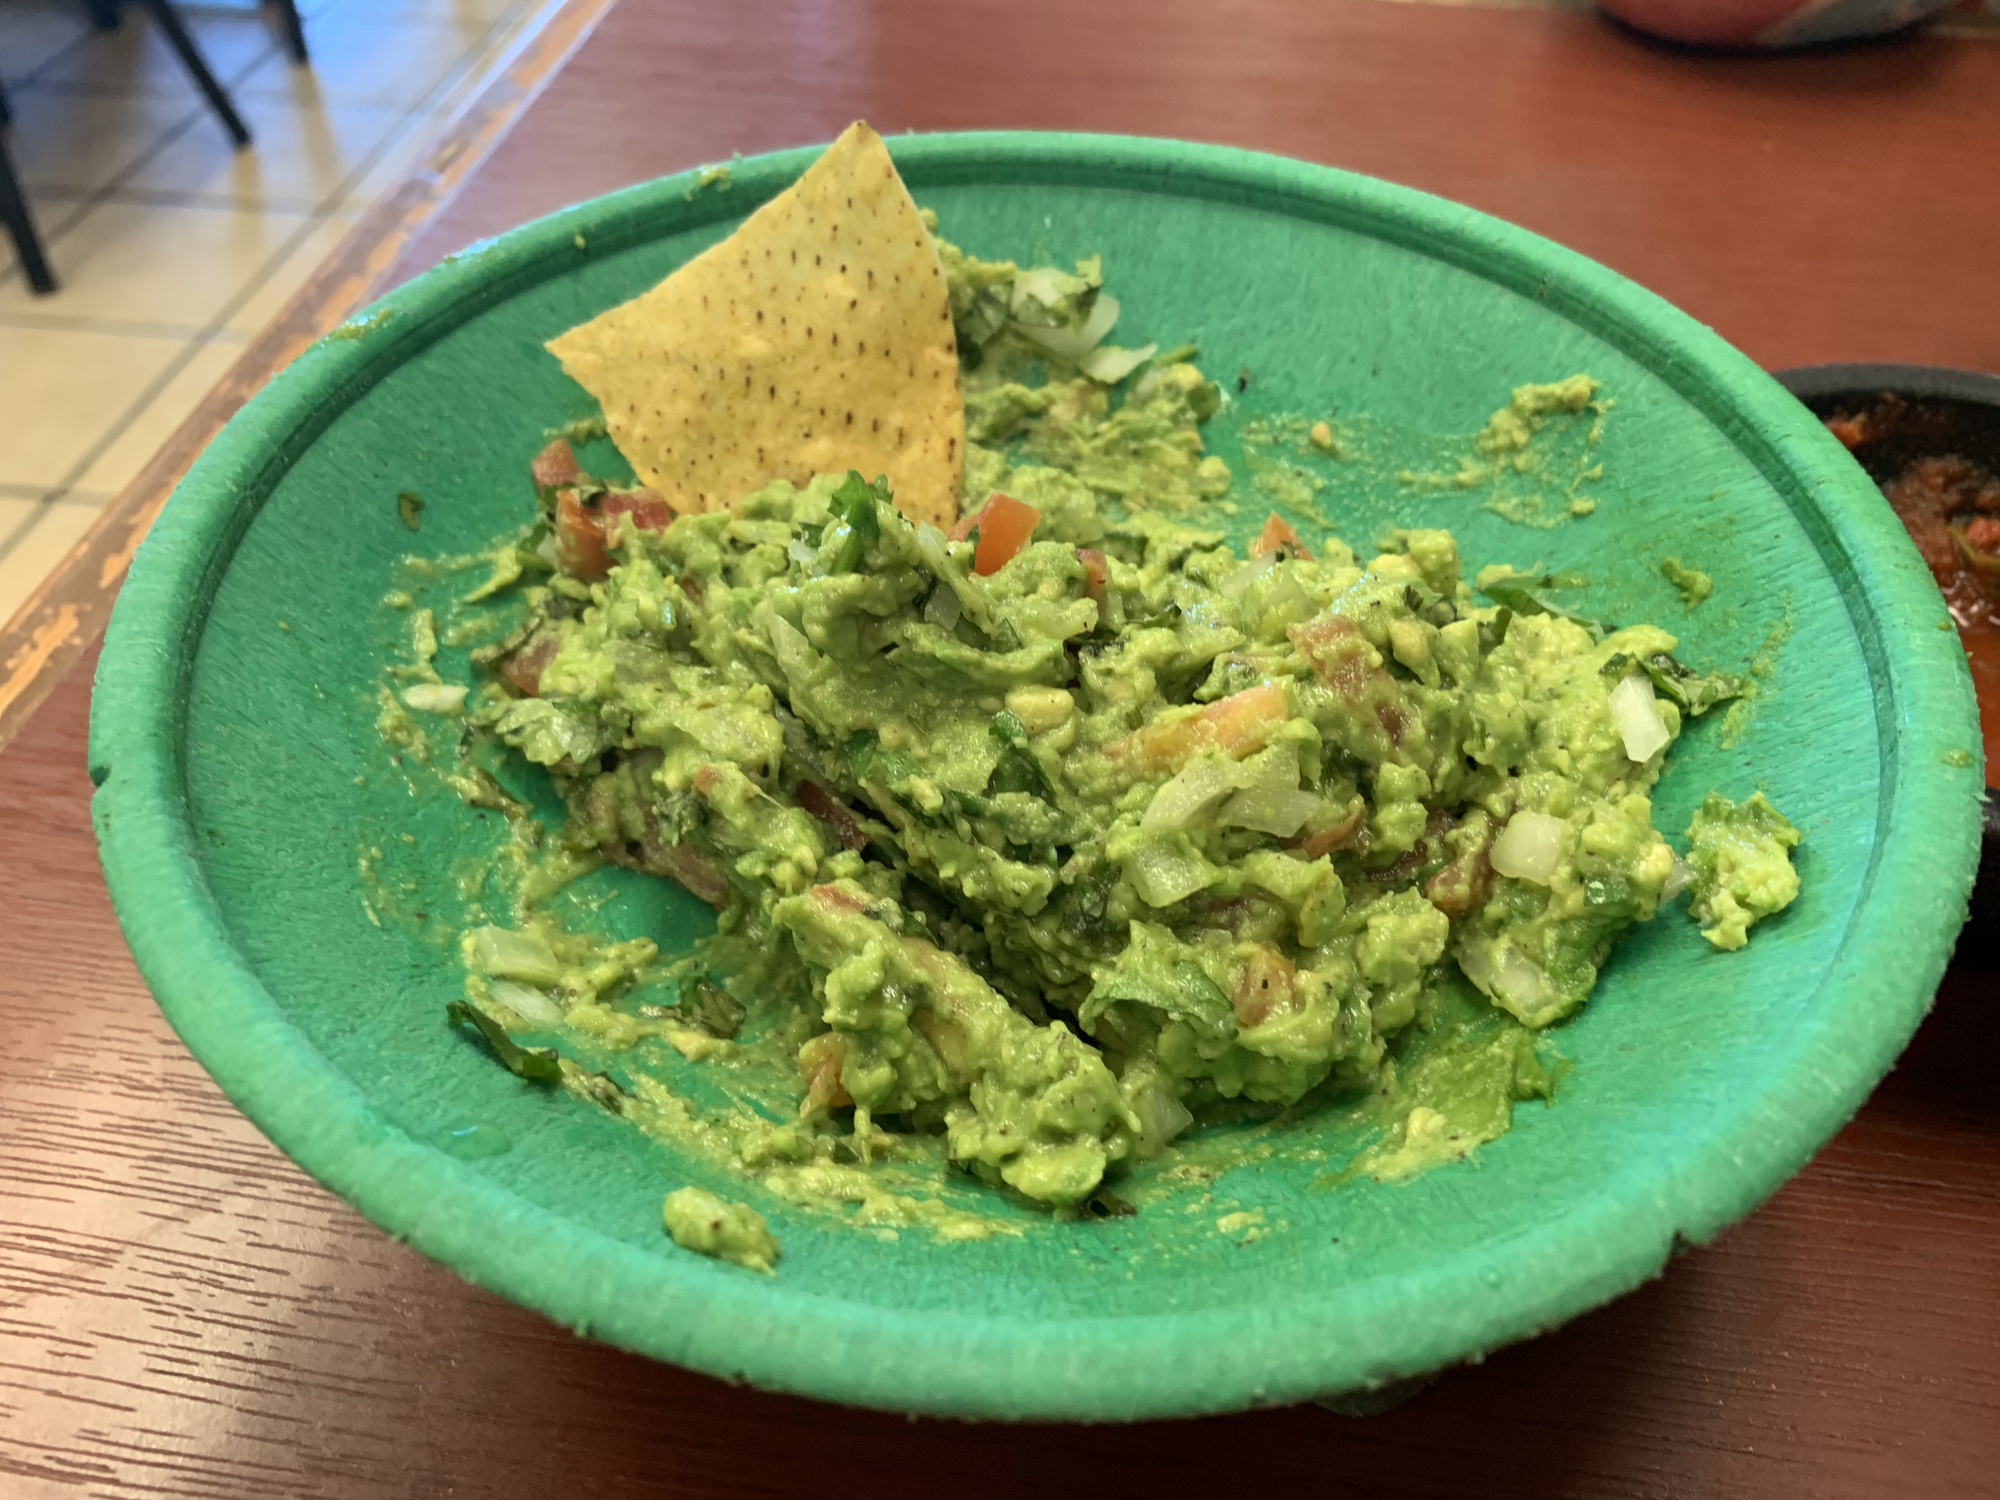 Partially eaten guacamole with a tortilla chip on a green plate